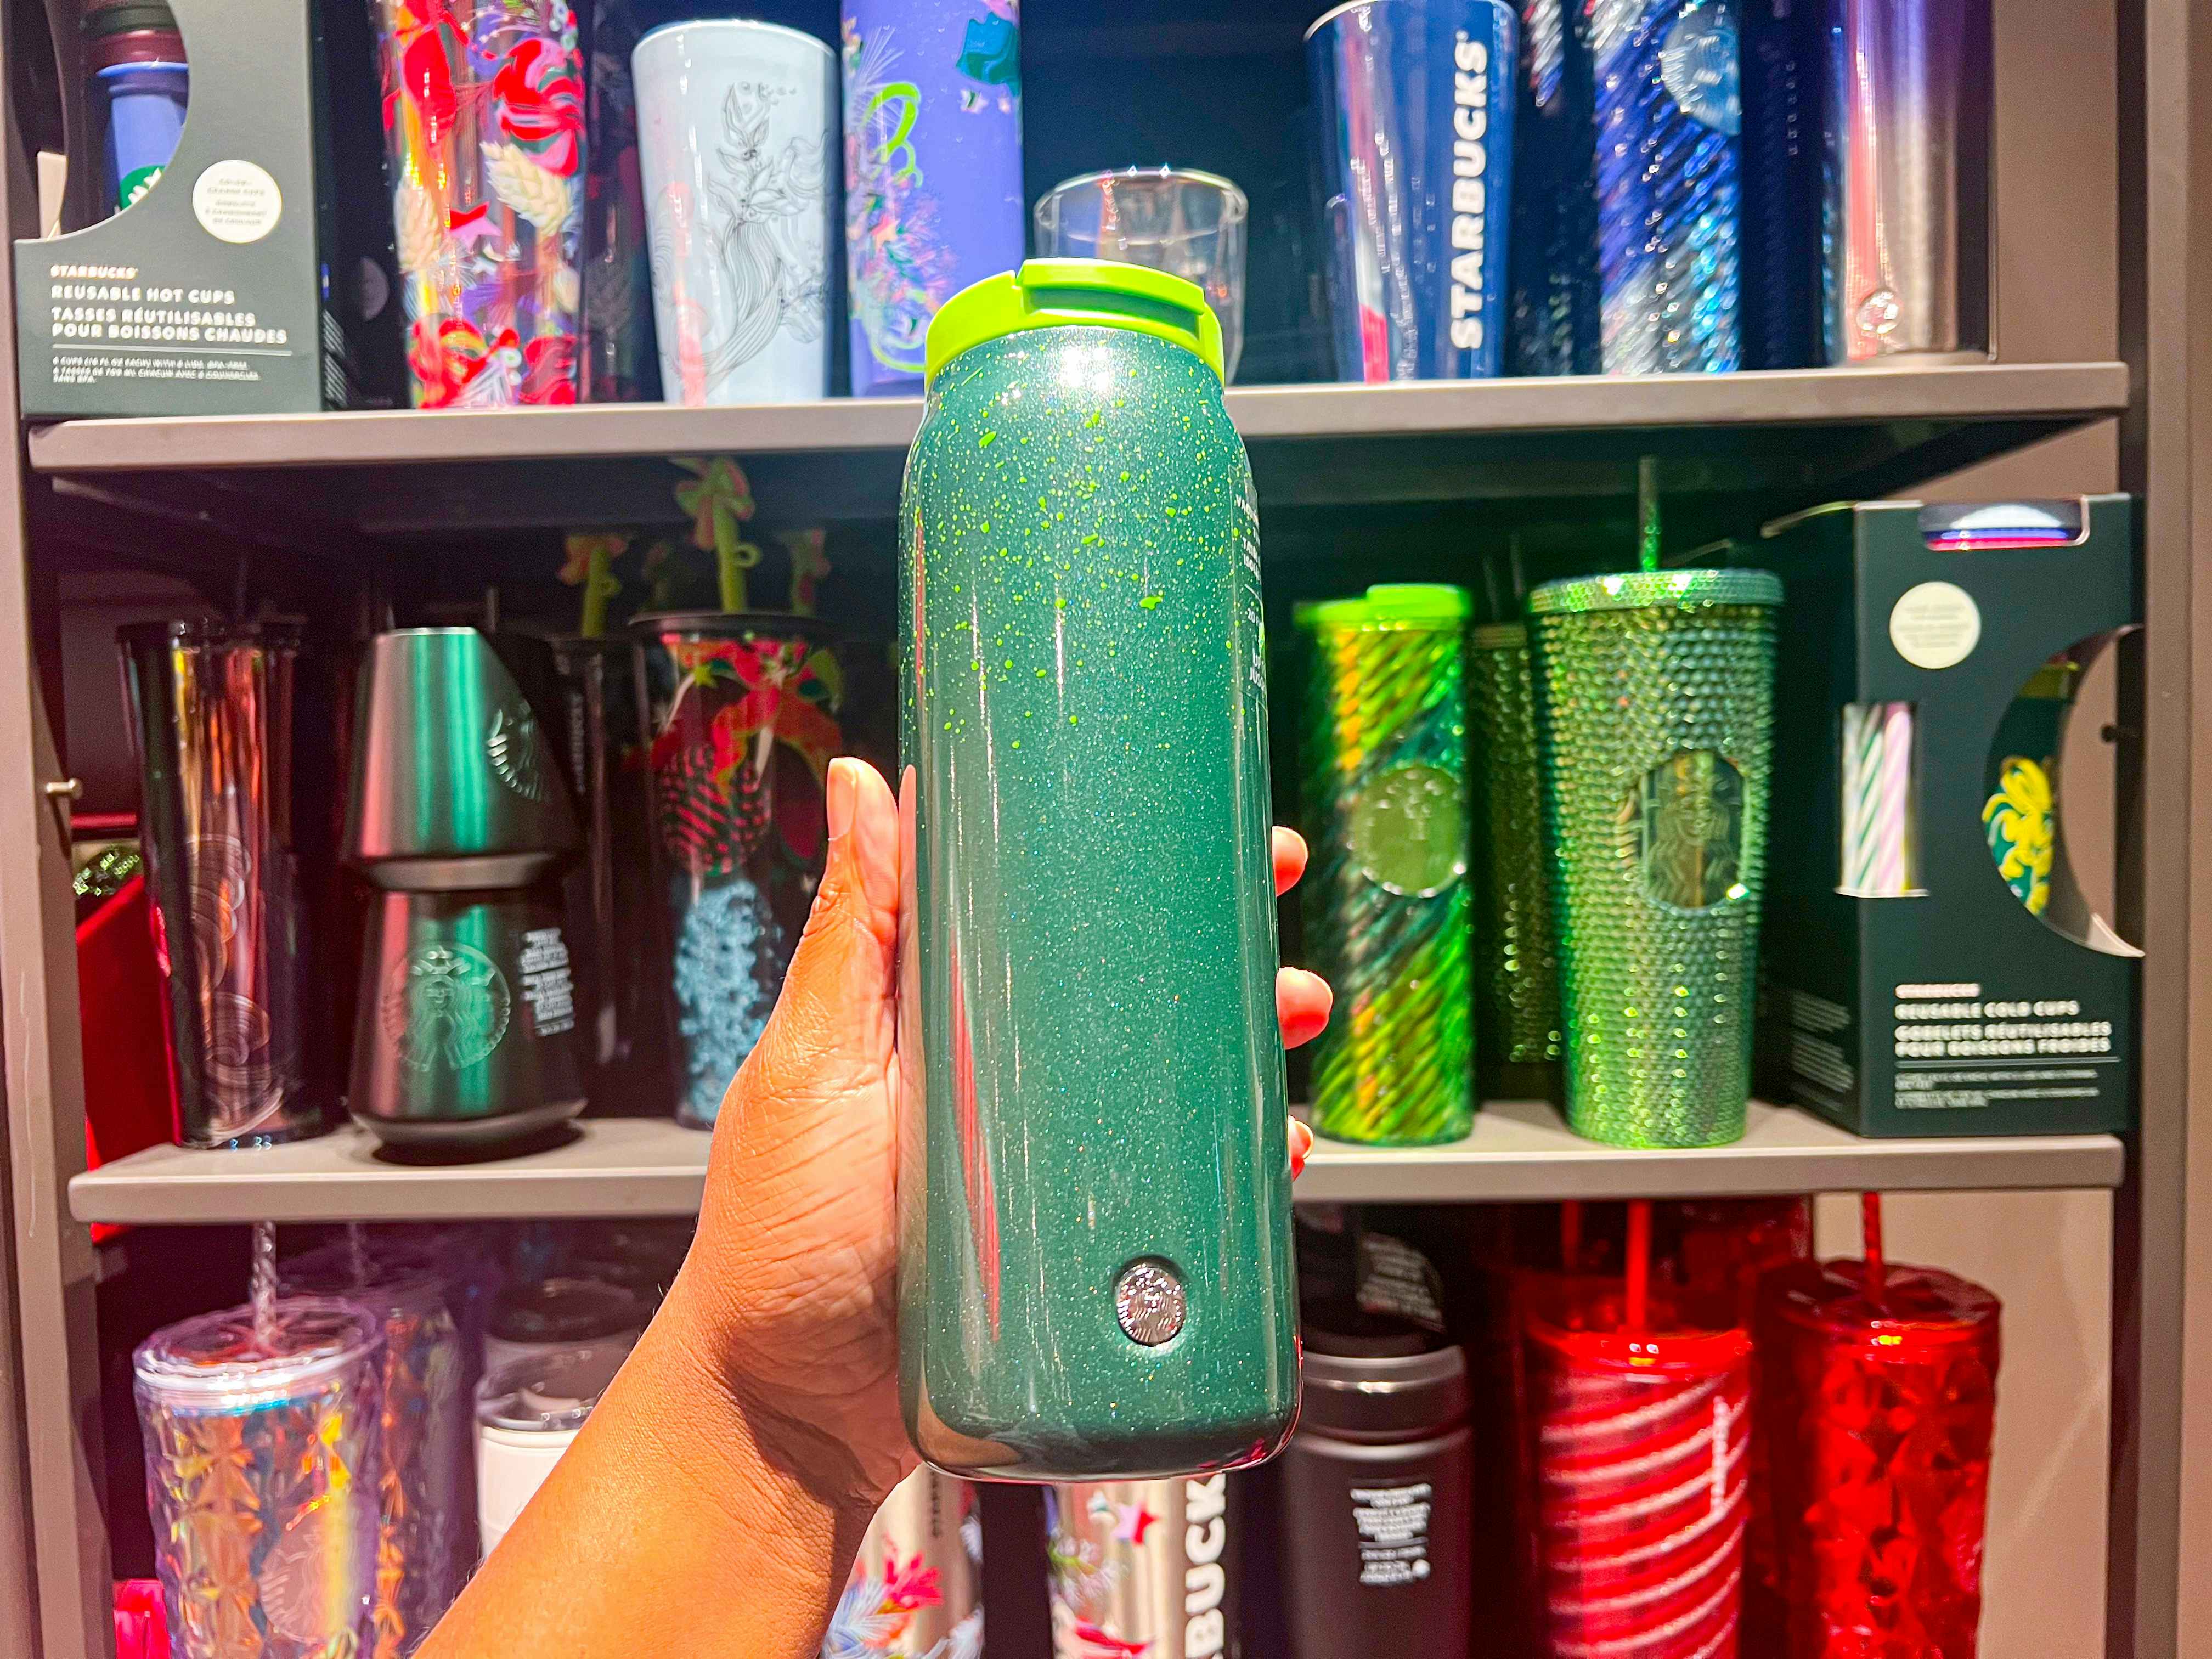 Festive Green 12oz Plastic Cups | 50ct